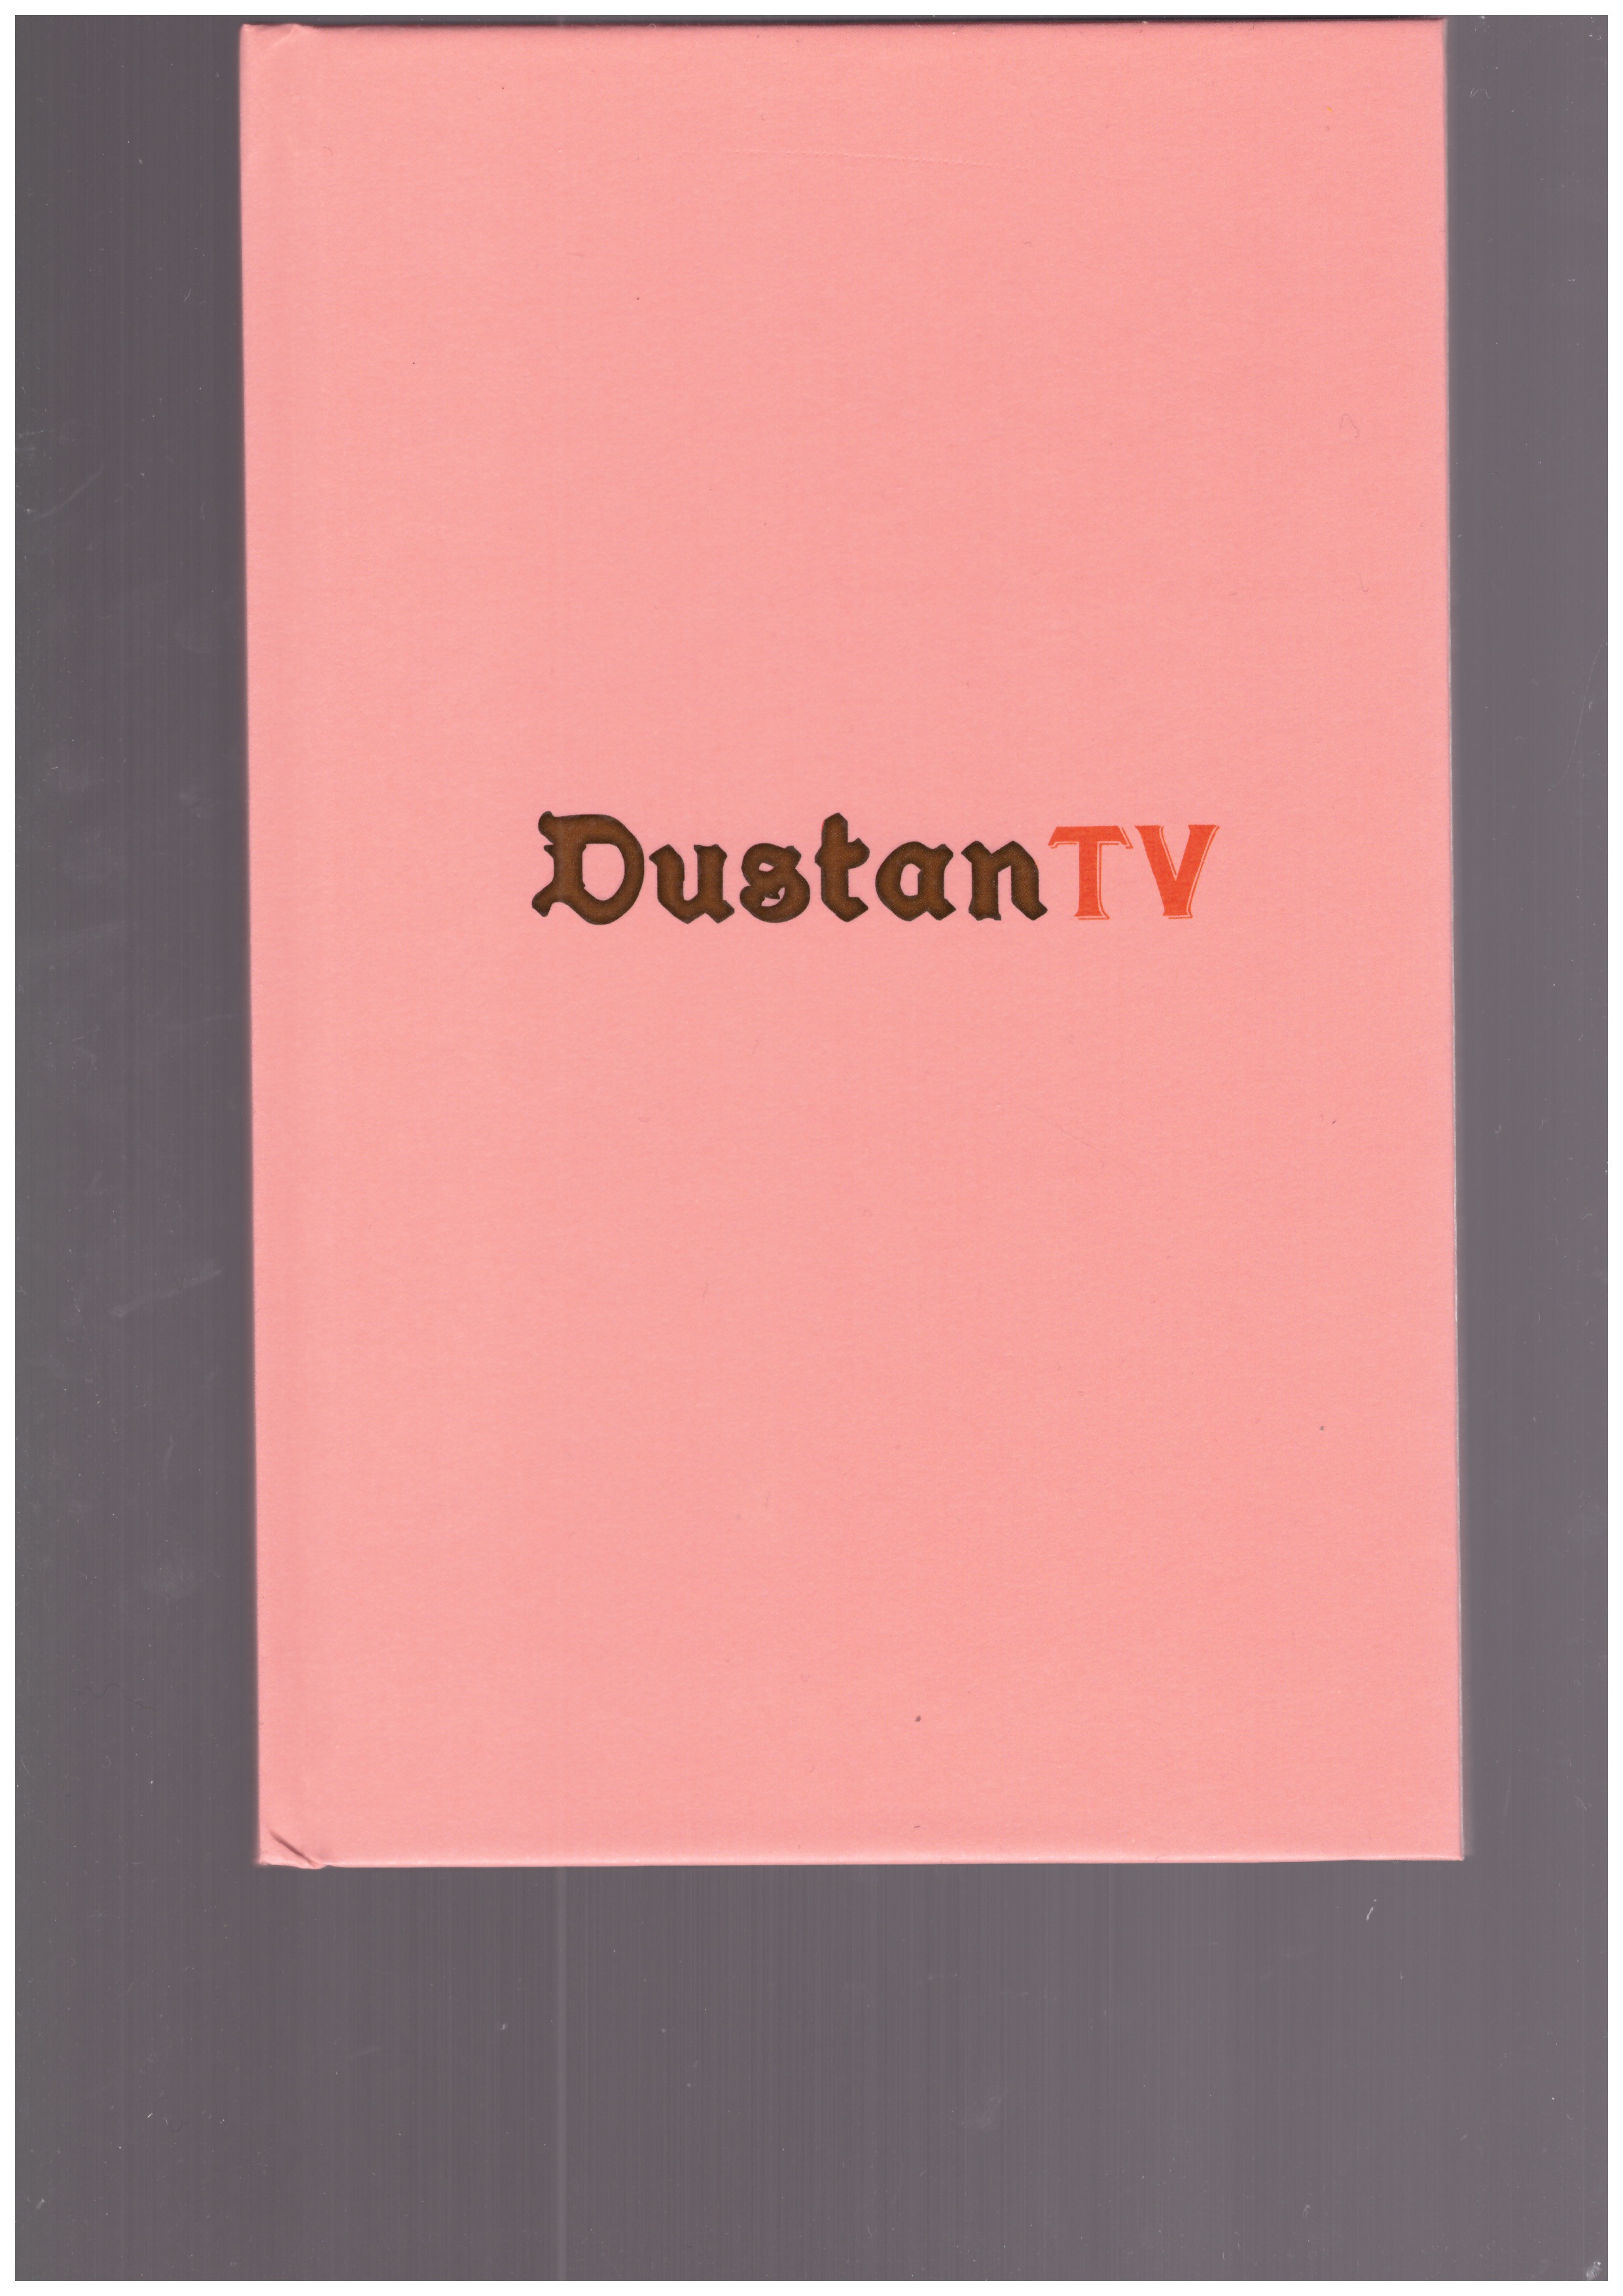 DUSTAN, Guillaume; BOUCHÉ-PILLON, Johann (ed.) - Dustan TV